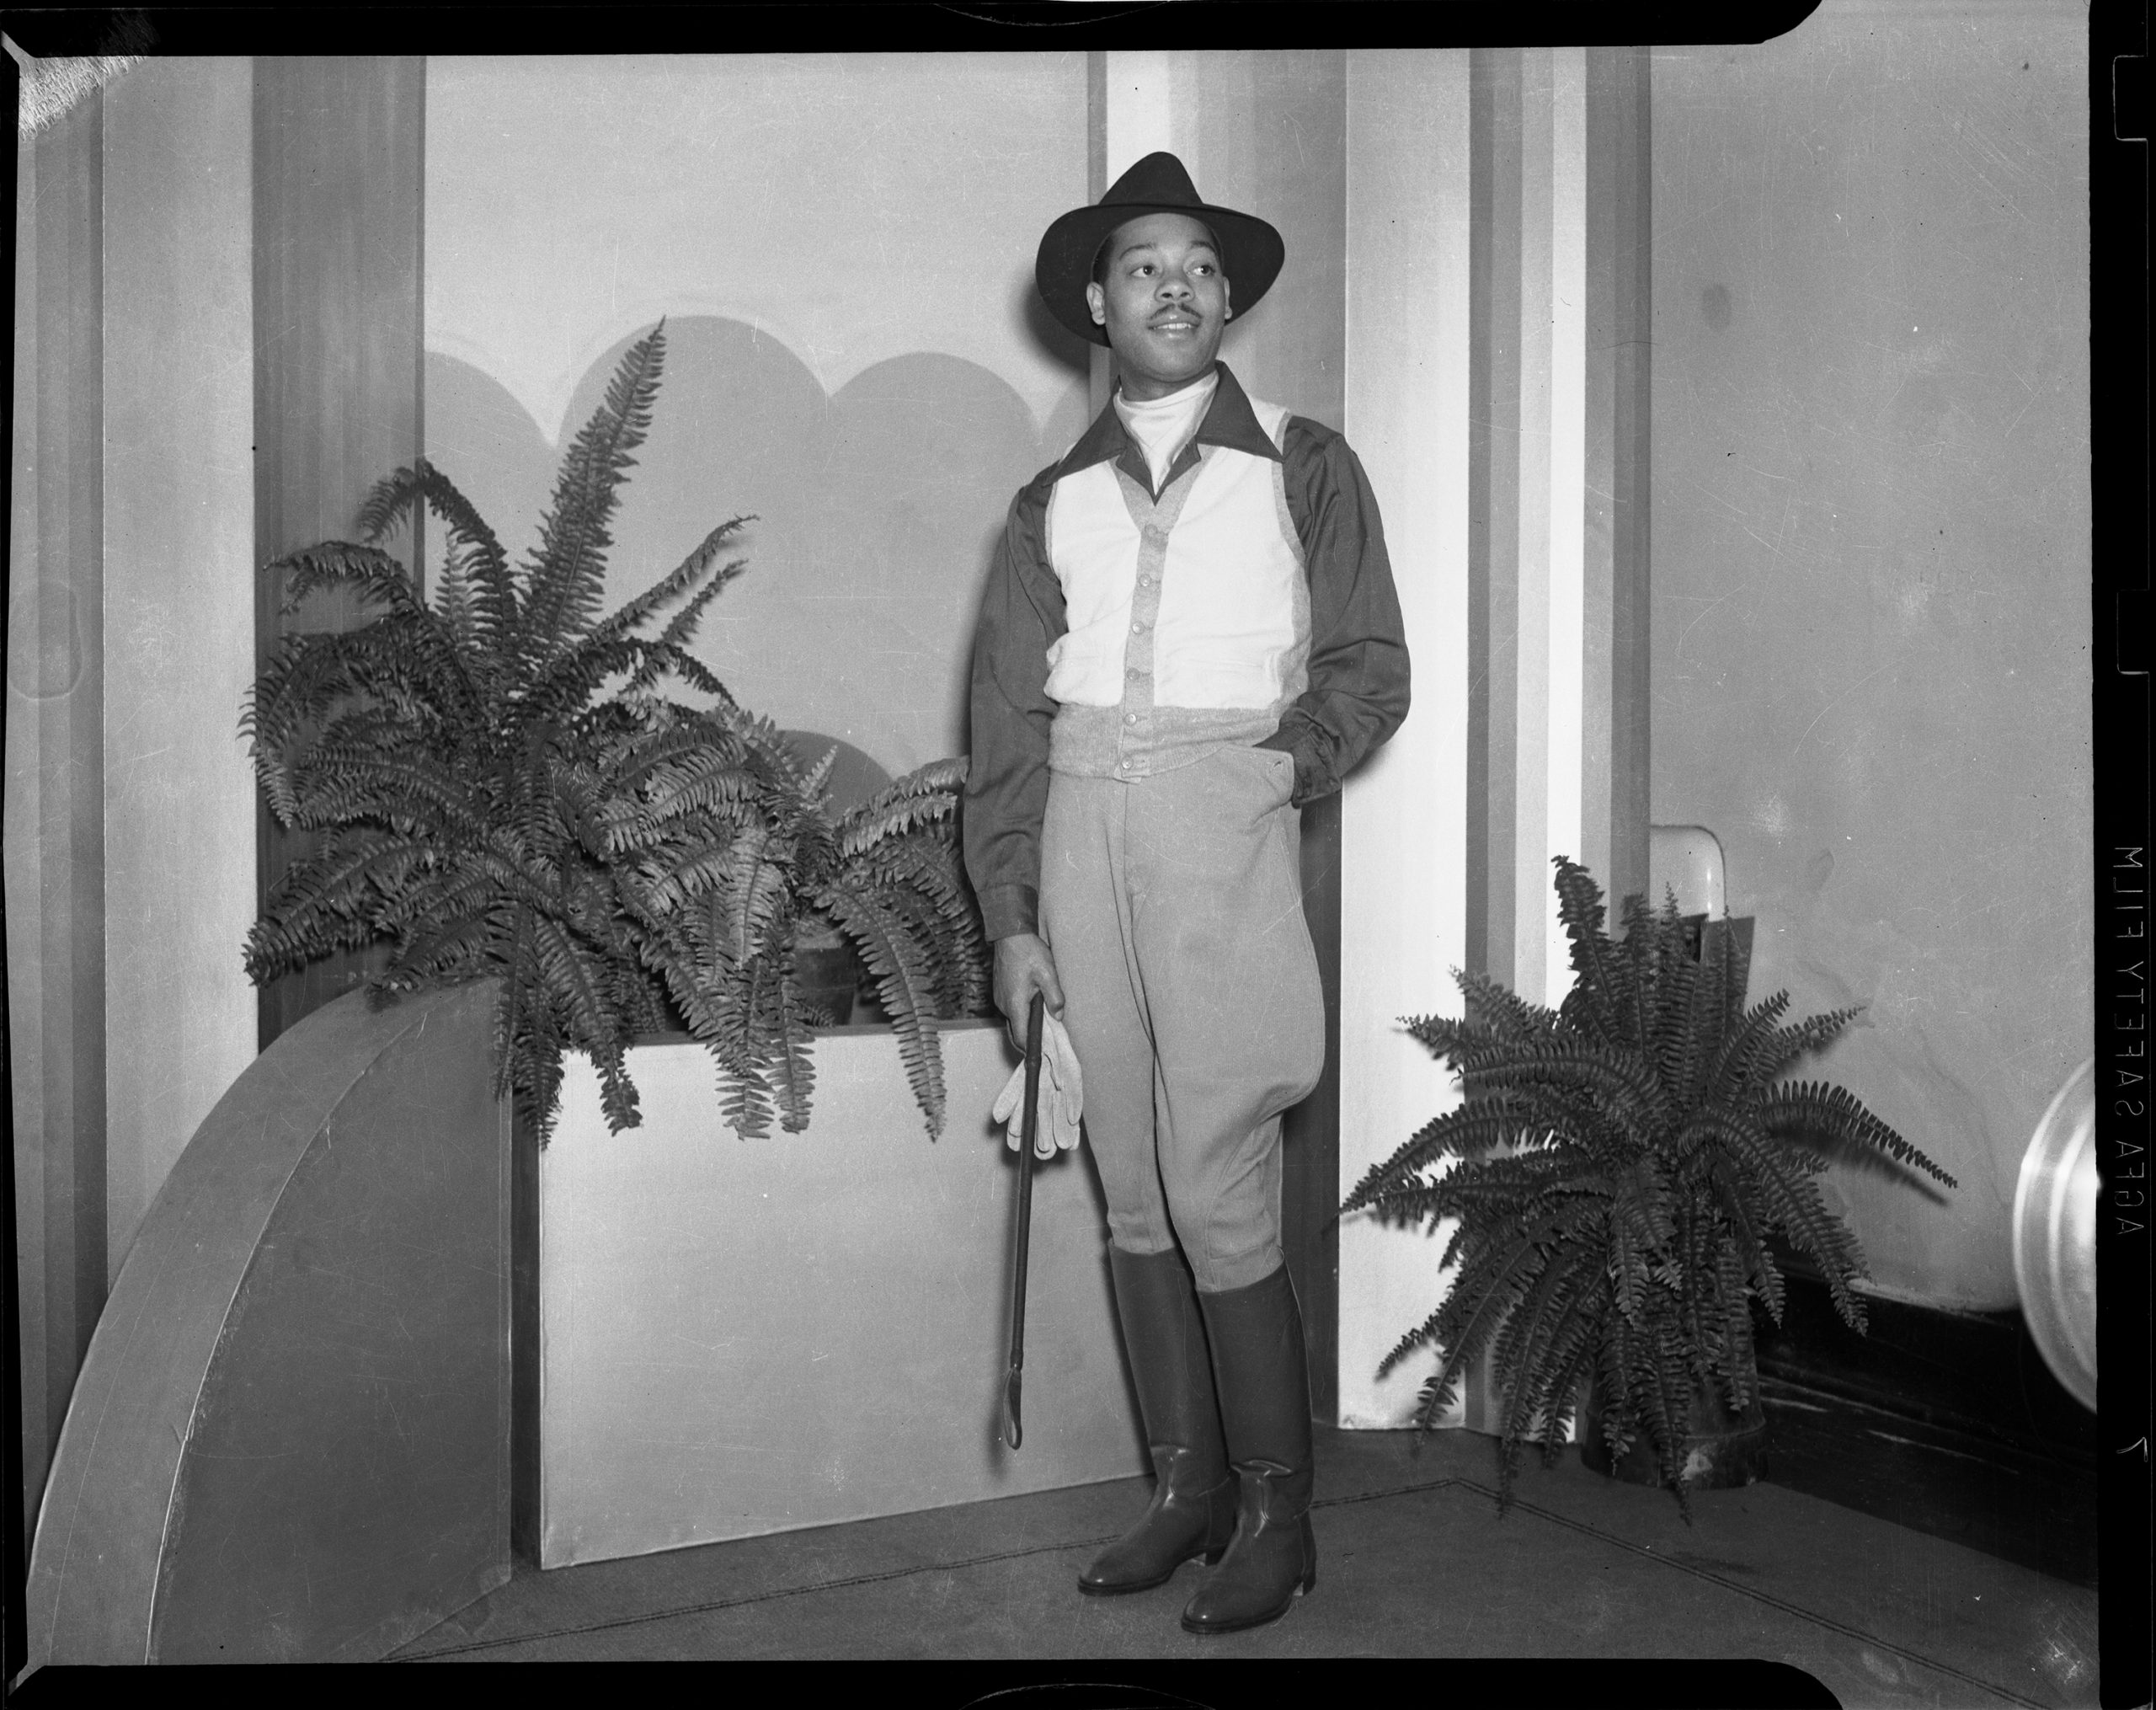     Charles “Teenie” Harris, Model Louis Smith wearing Jodhpurs, 1940-1945. Silver Gelatin print. Courtesy of Carnegie Museum of Art, Pittsburgh.

